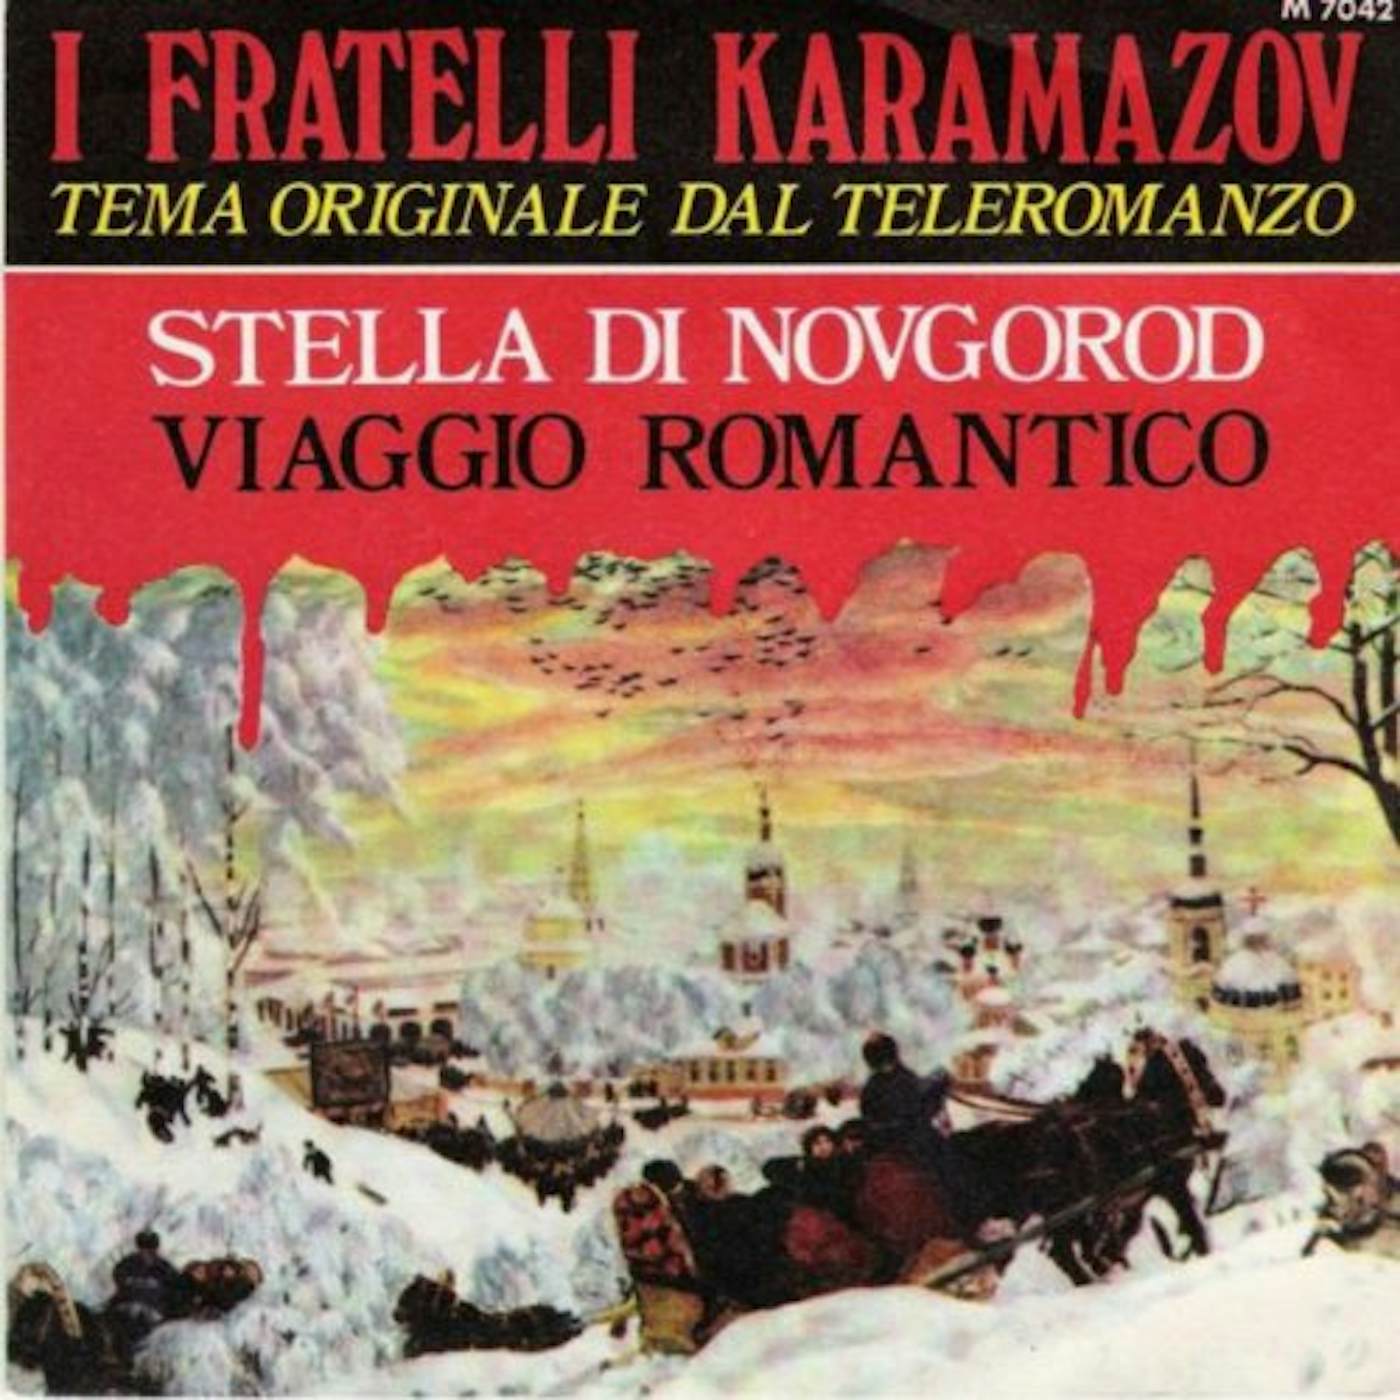 Piero Piccioni I FRATELLI KARAMAZOV / Original Soundtrack CD